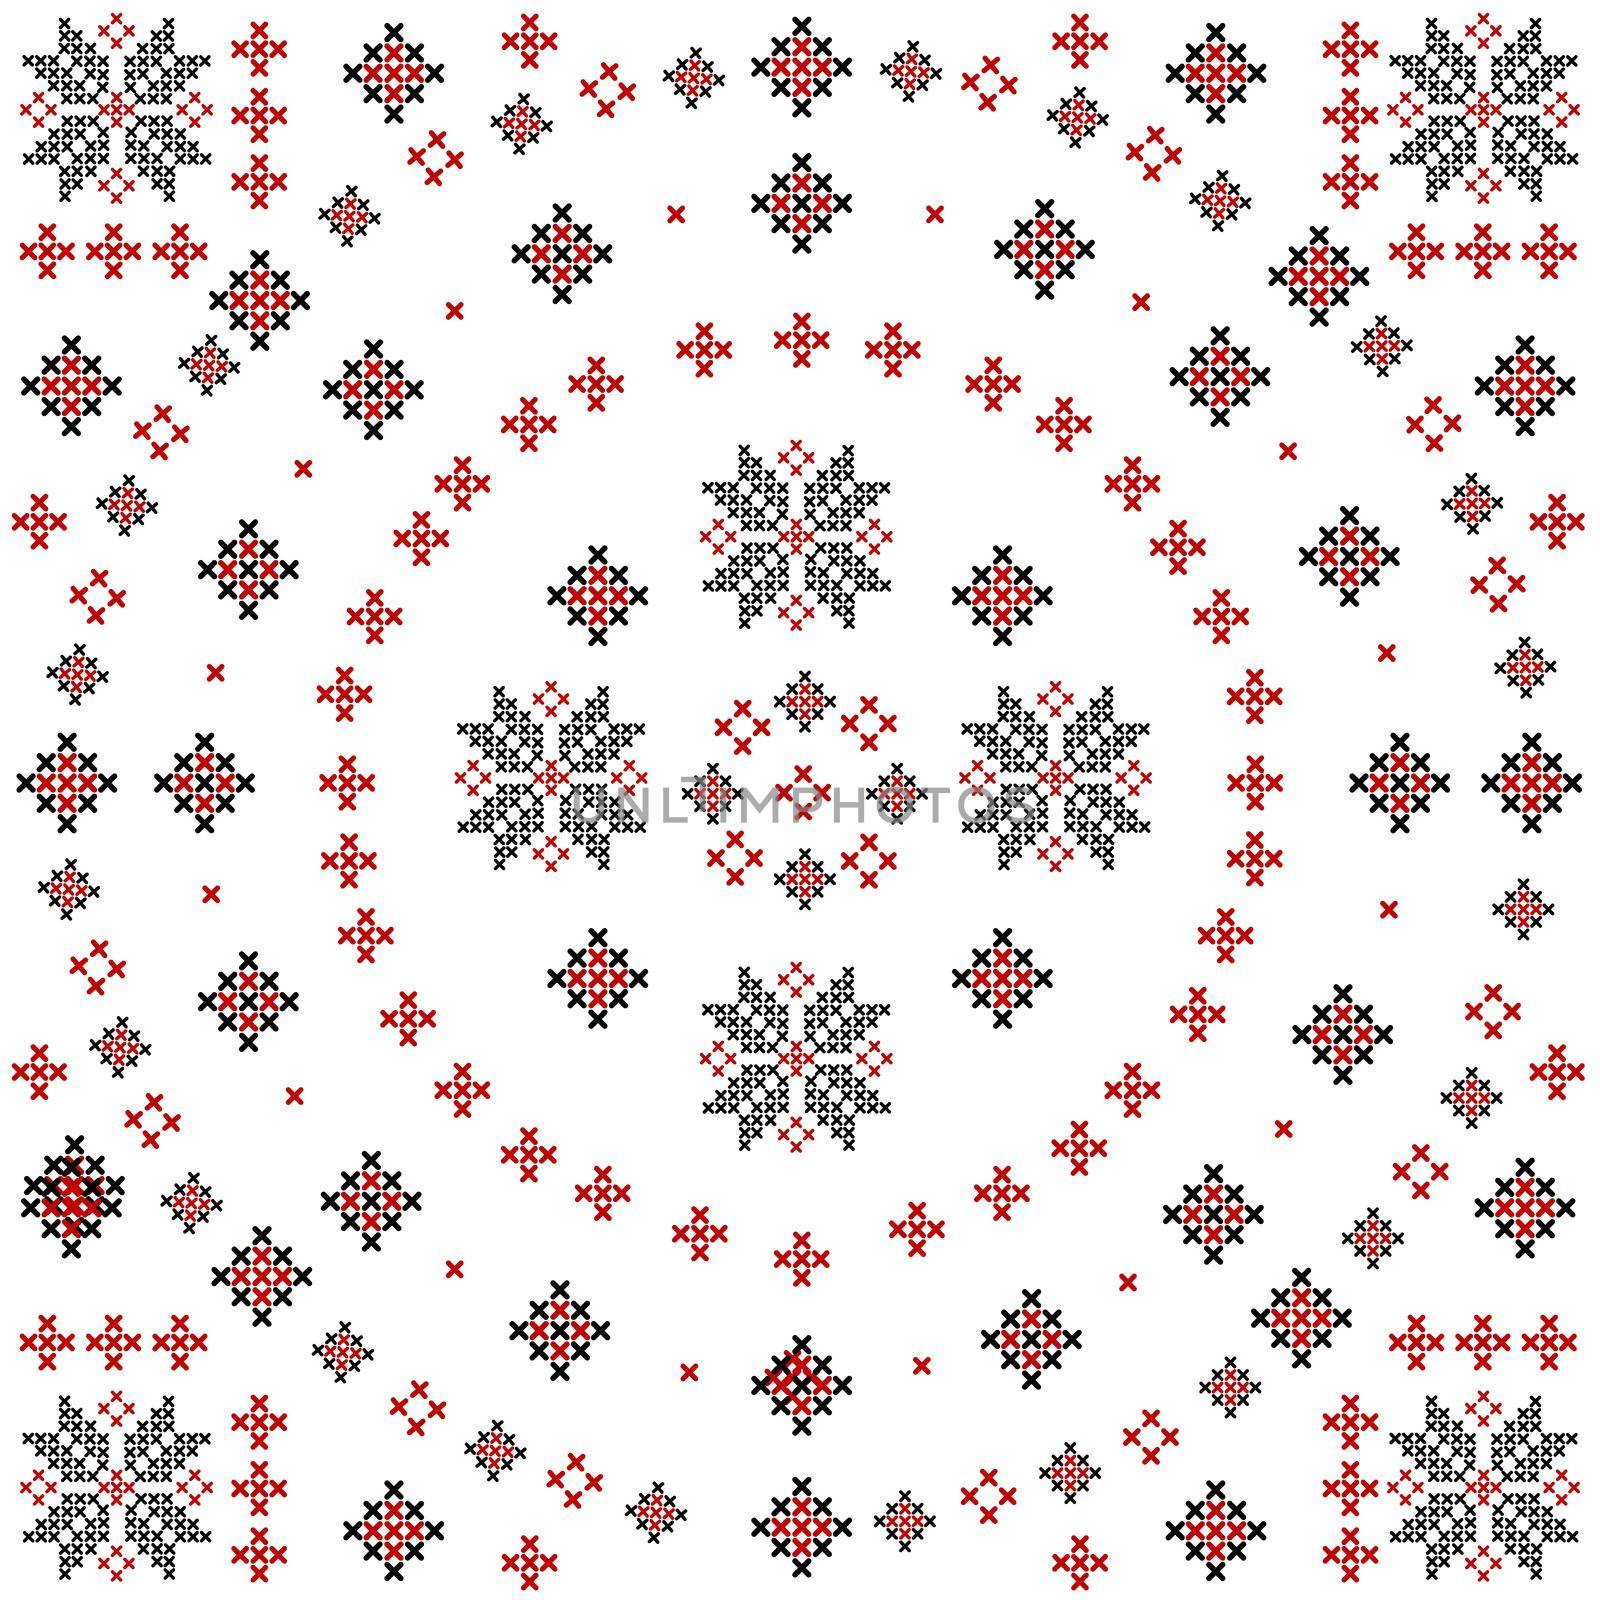 Embroidered cross-stitch round pattern on white background by hibrida13